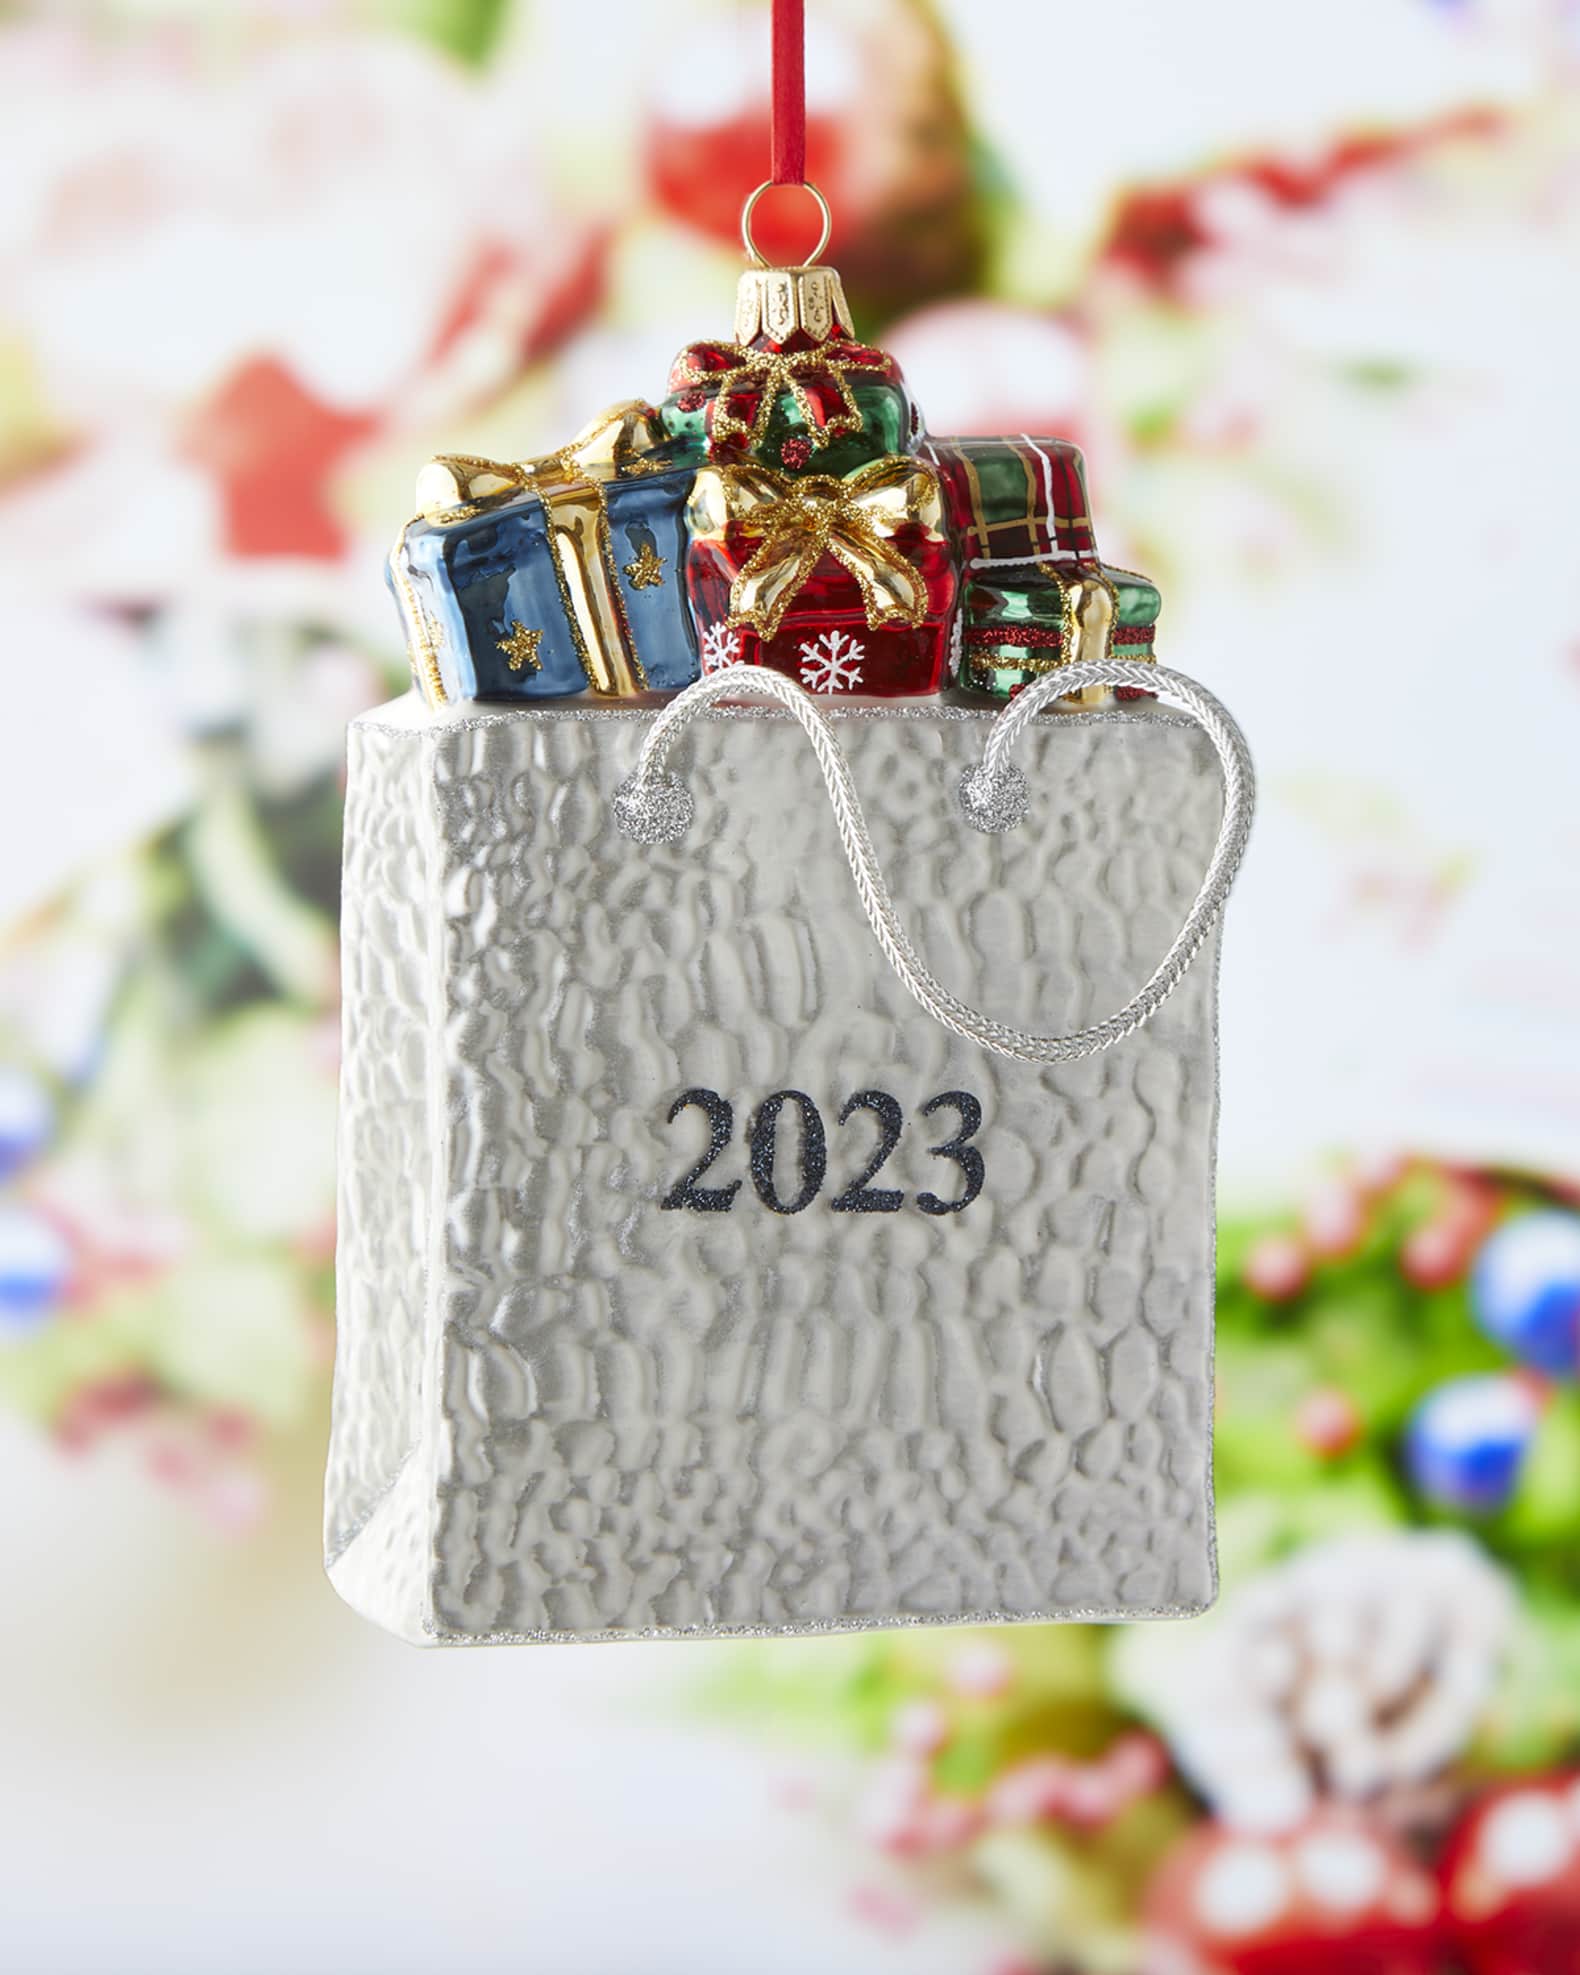 Neiman Marcus NM 2022 Bag Ornament